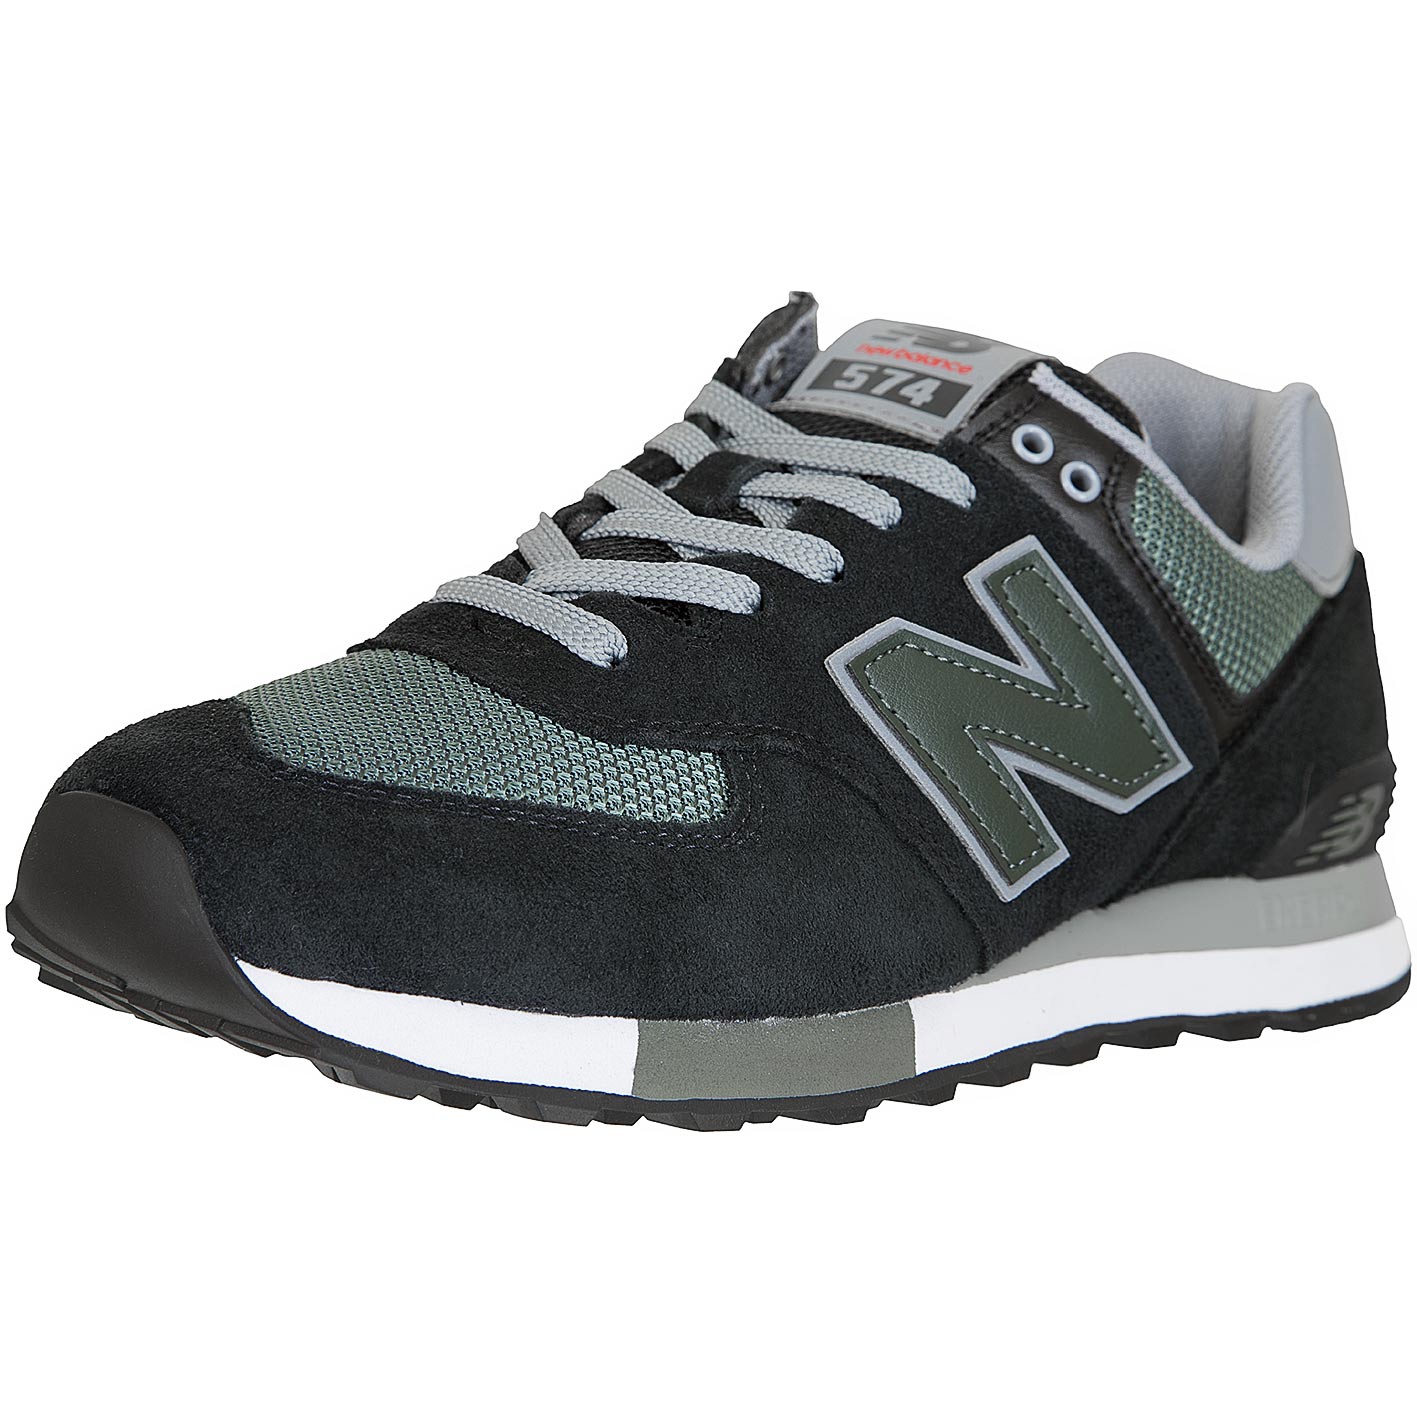 ☆ New Balance Sneaker 574 Leather/Textile/PU schwarz/grün - hier bestellen!